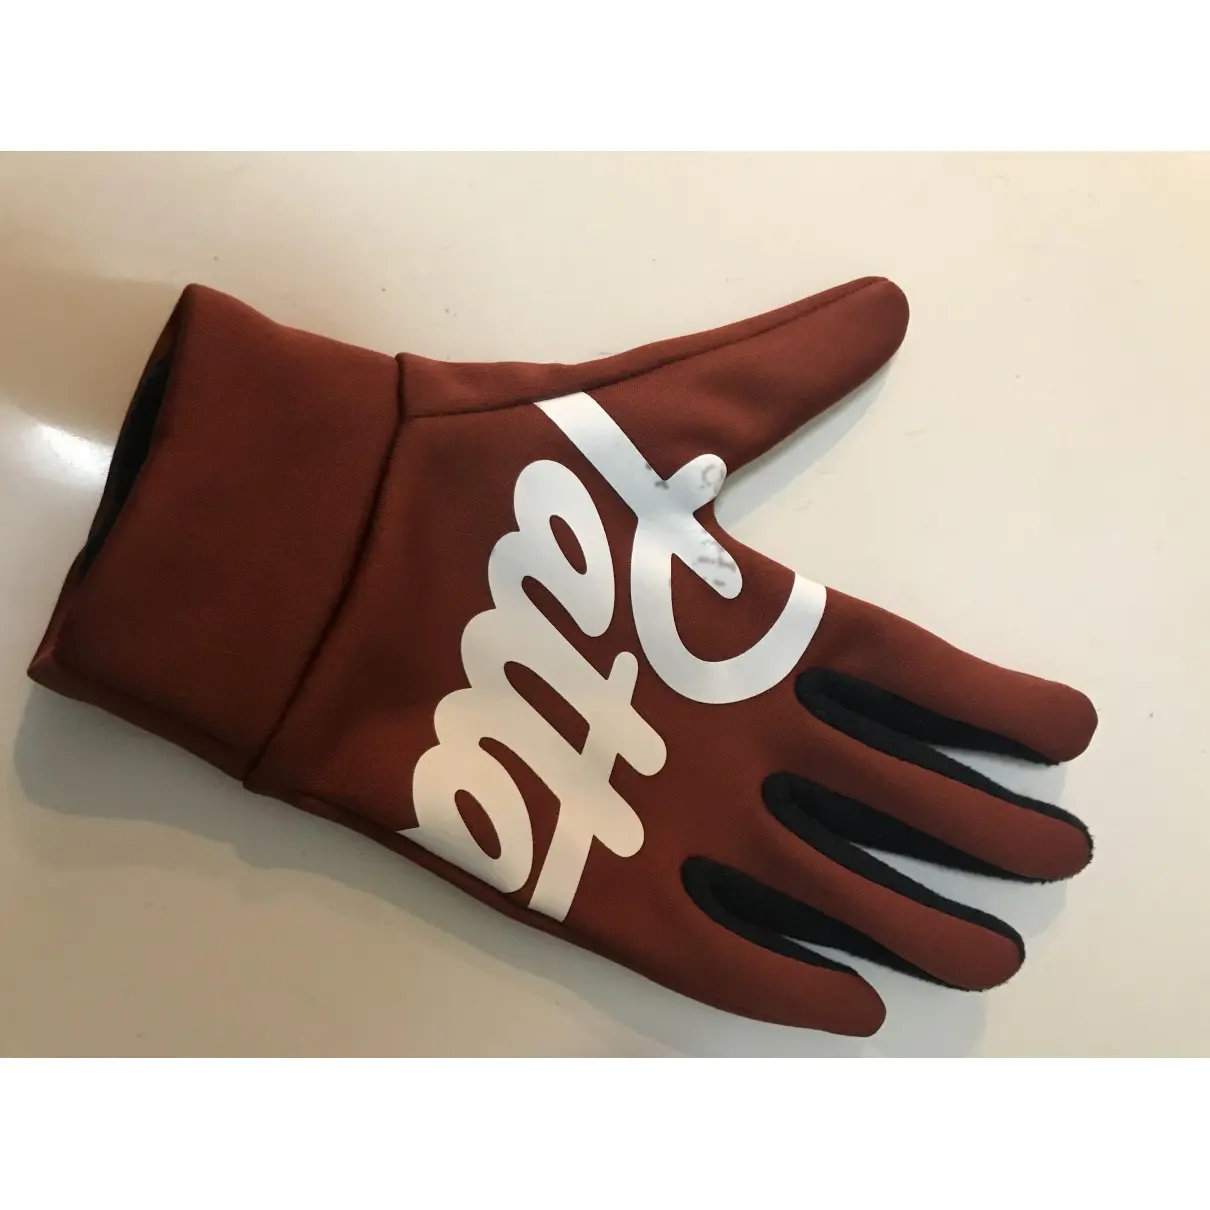 Buy Patta Gloves online